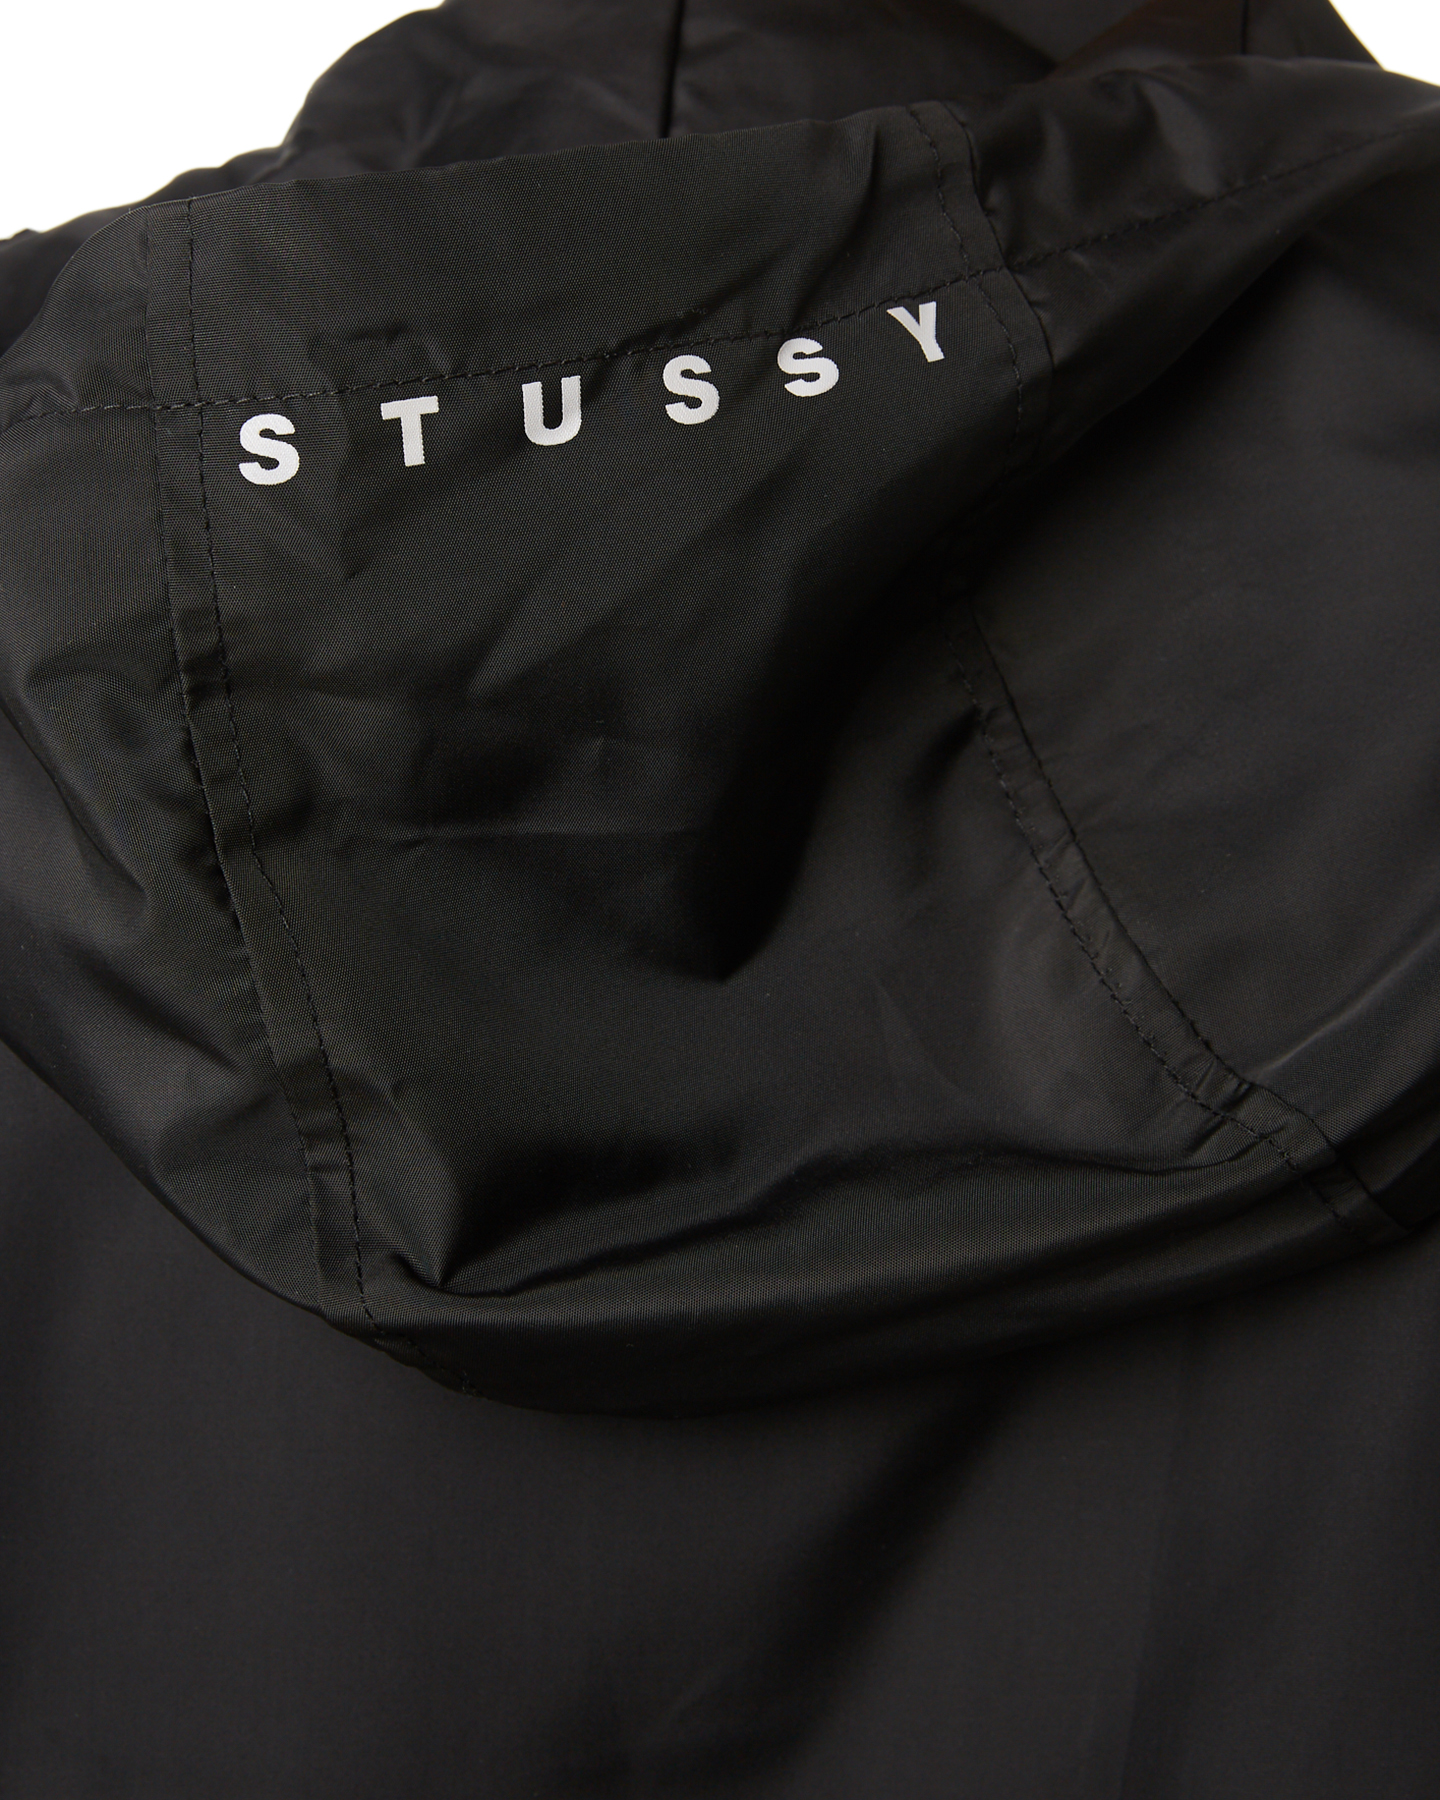 Stussy Stock Mens Jacket - Black | SurfStitch